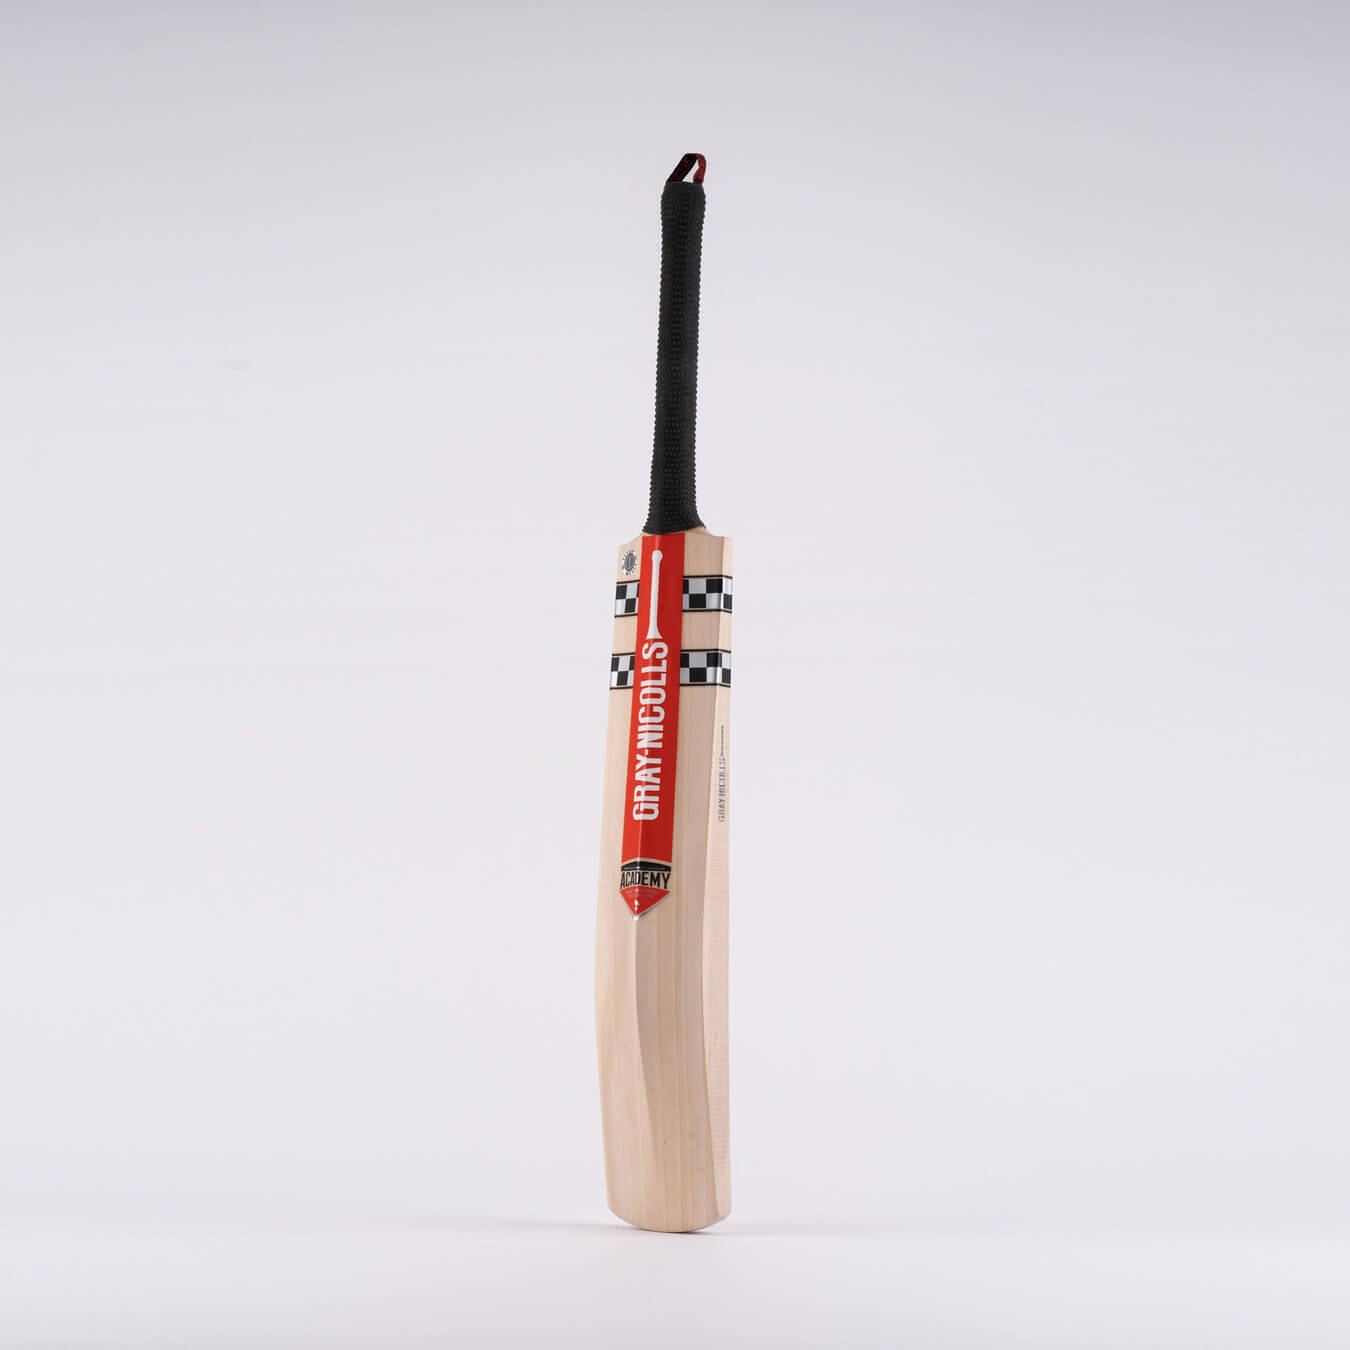 GN Academy Junior Cricket Bat - Kiwisport.de